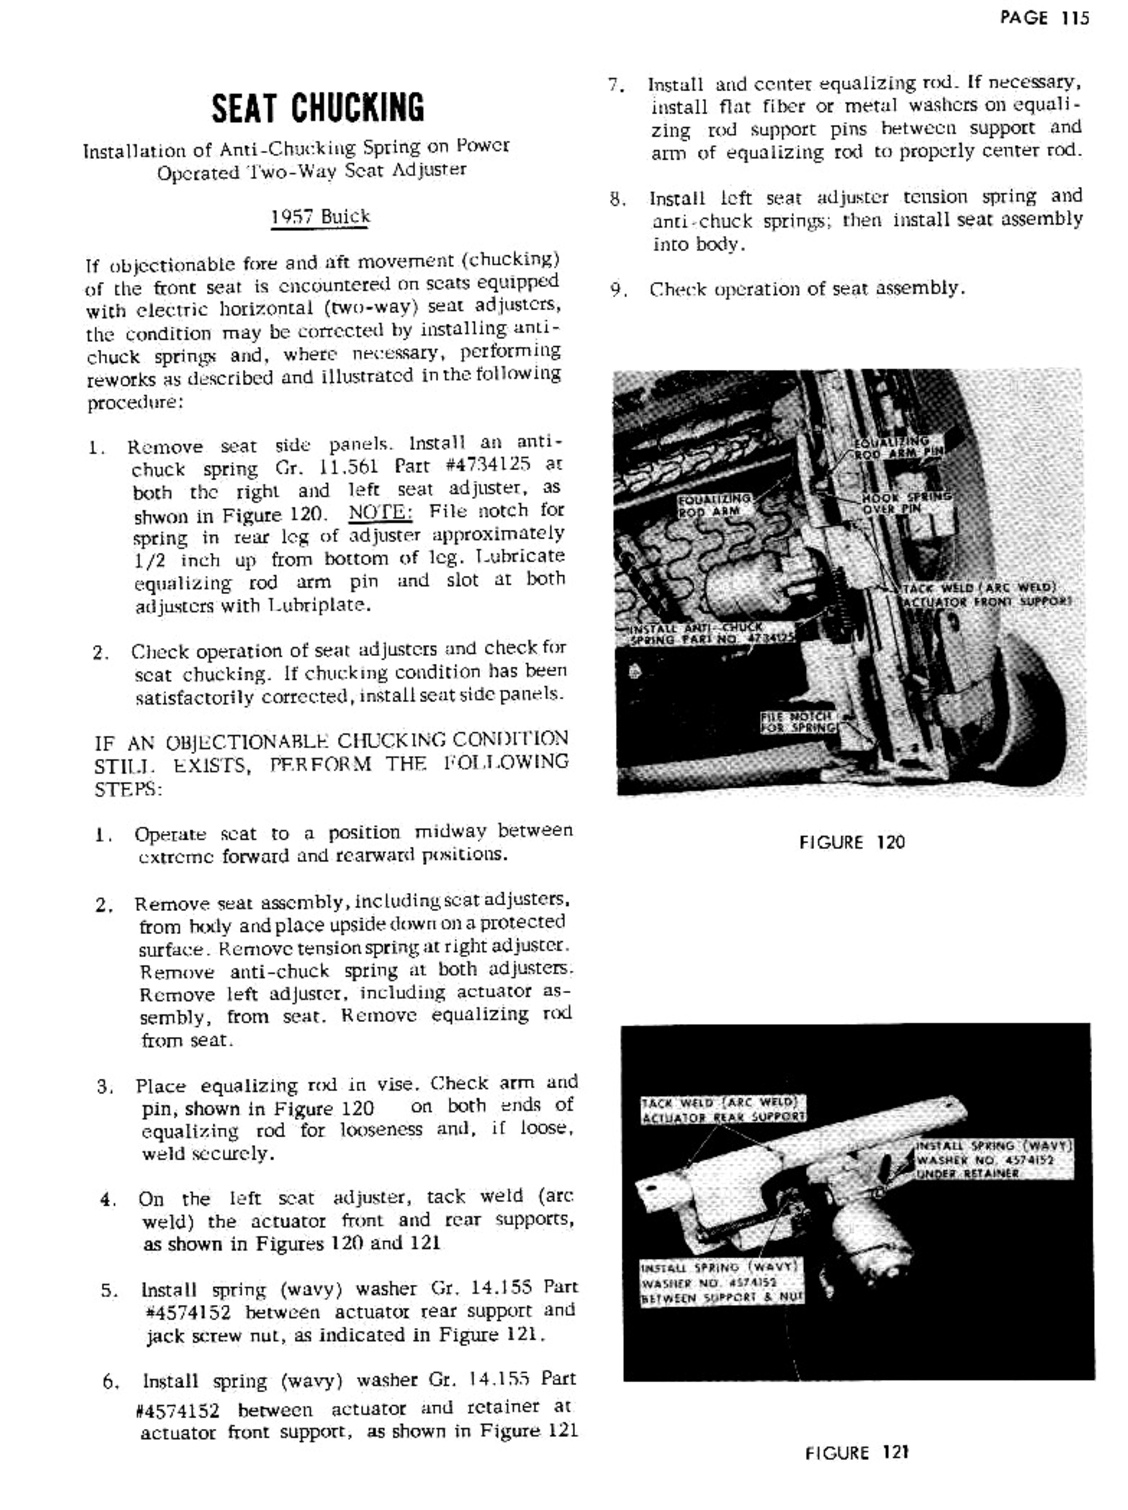 n_1957 Buick Product Service  Bulletins-116-116.jpg